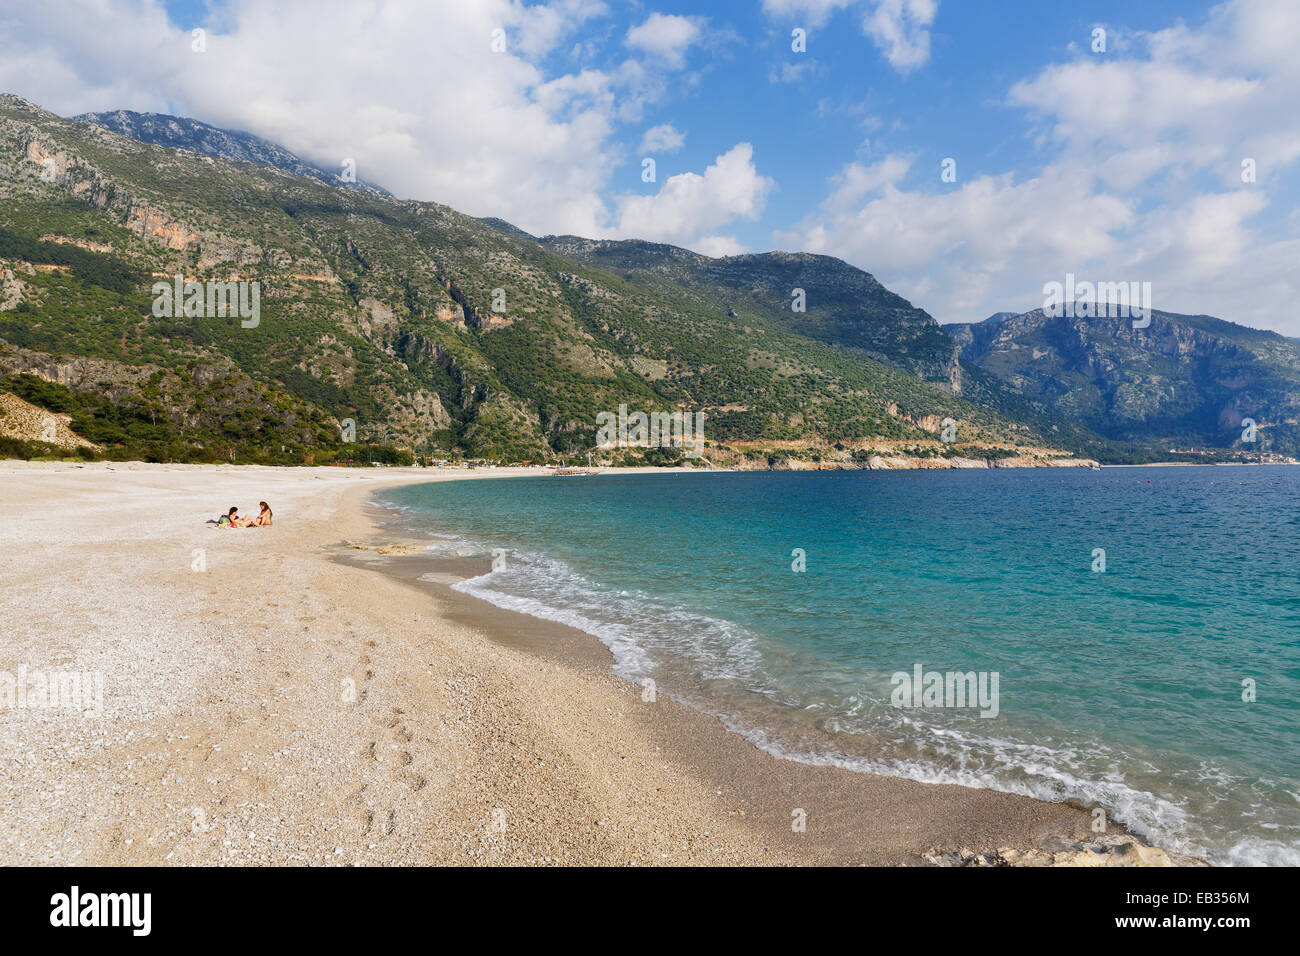 Spiaggia di Ölüdeniz con Mt Baba Dagi, Lycian coast, Ölüdeniz, Muğla provincia, regione del Mar Egeo, Turchia Foto Stock